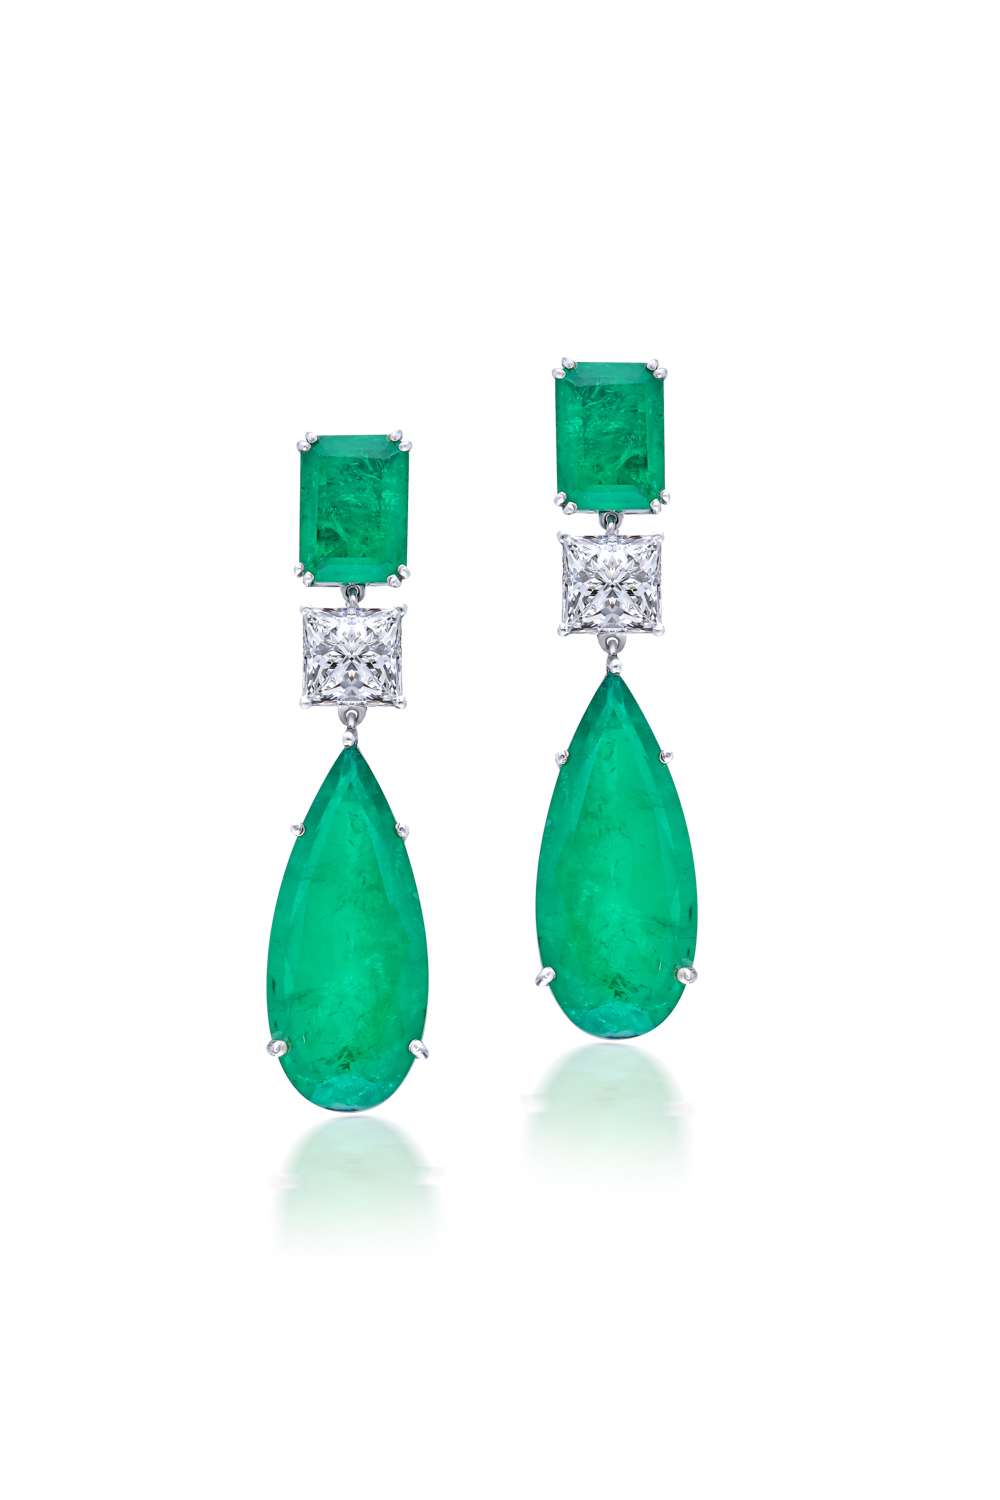 Buy Emeralds Lehar Pearl  Kundan Earrings for Women Online at Ajnaa Jewels  391433